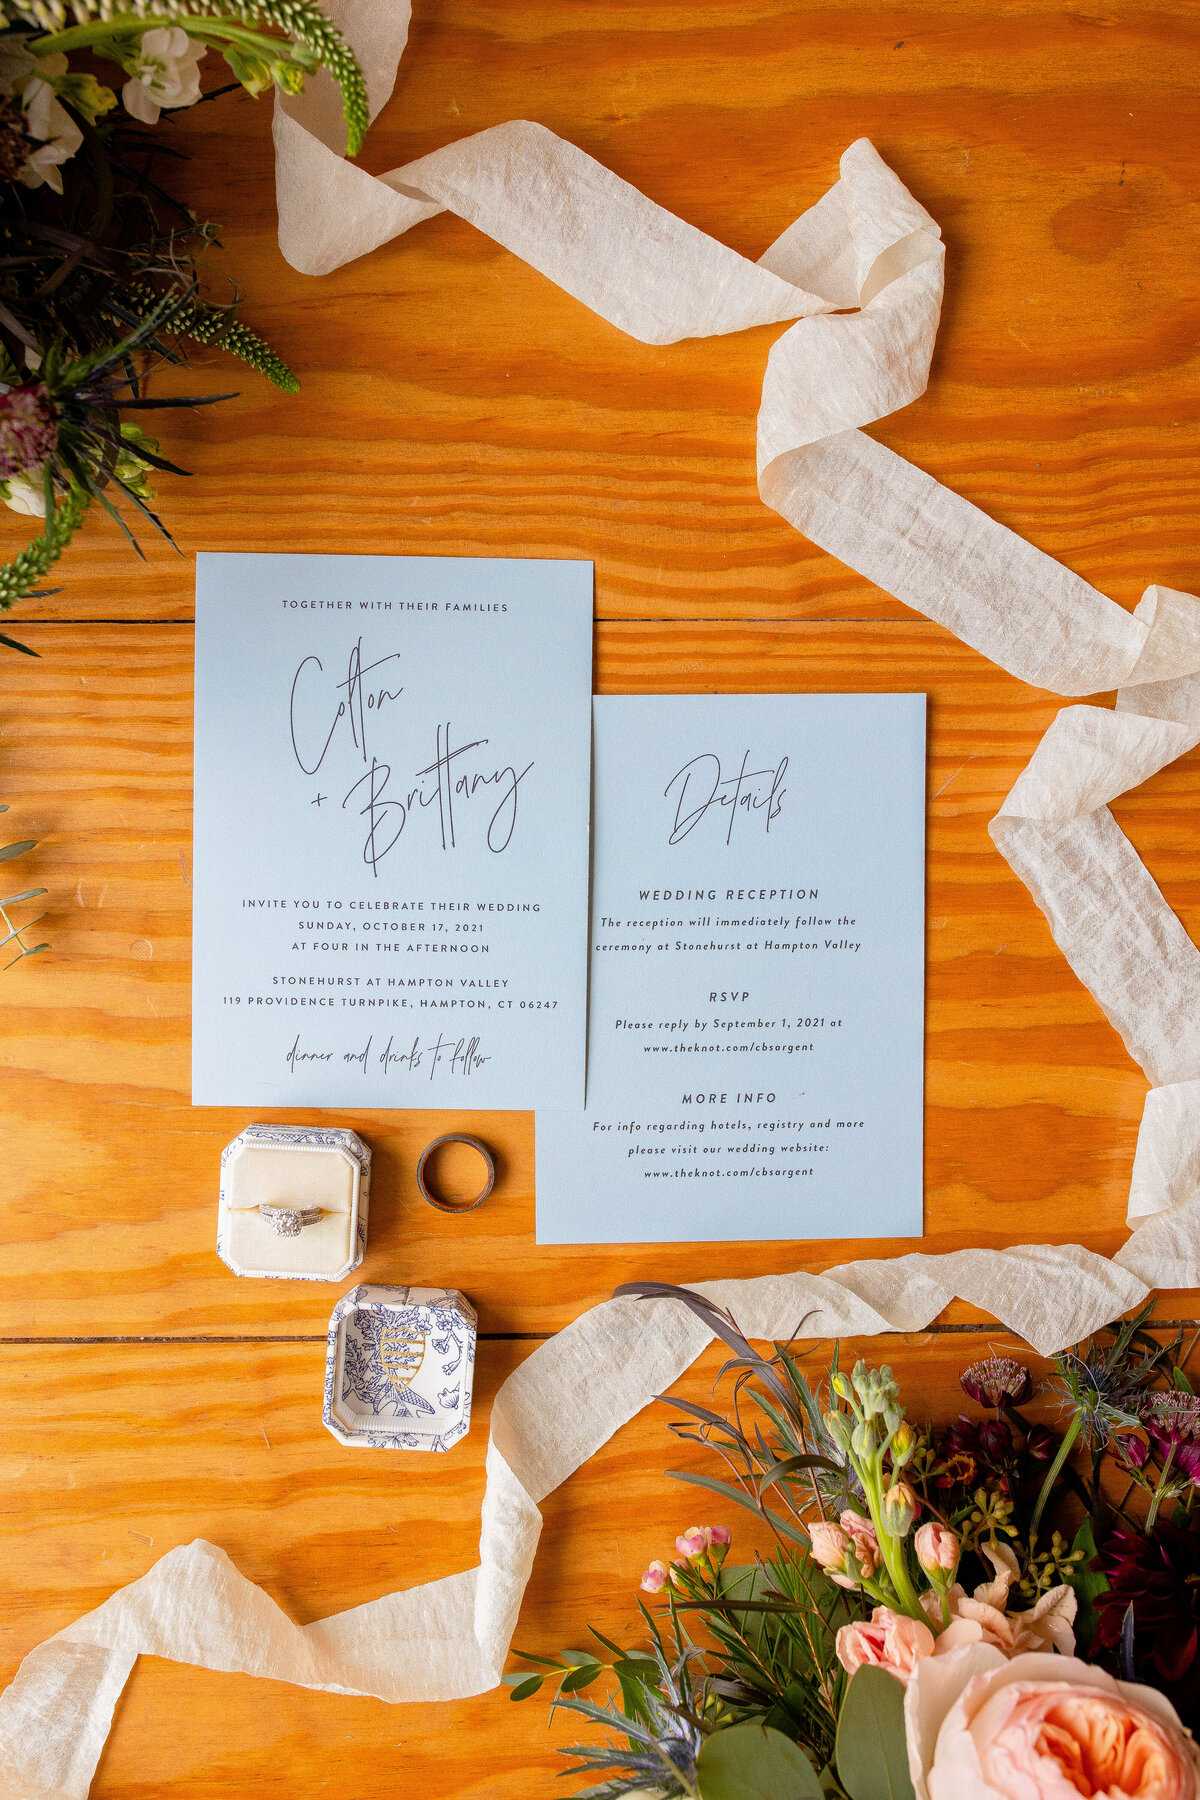 Wedding invitation and Mrs. Box jewelry wedding details.